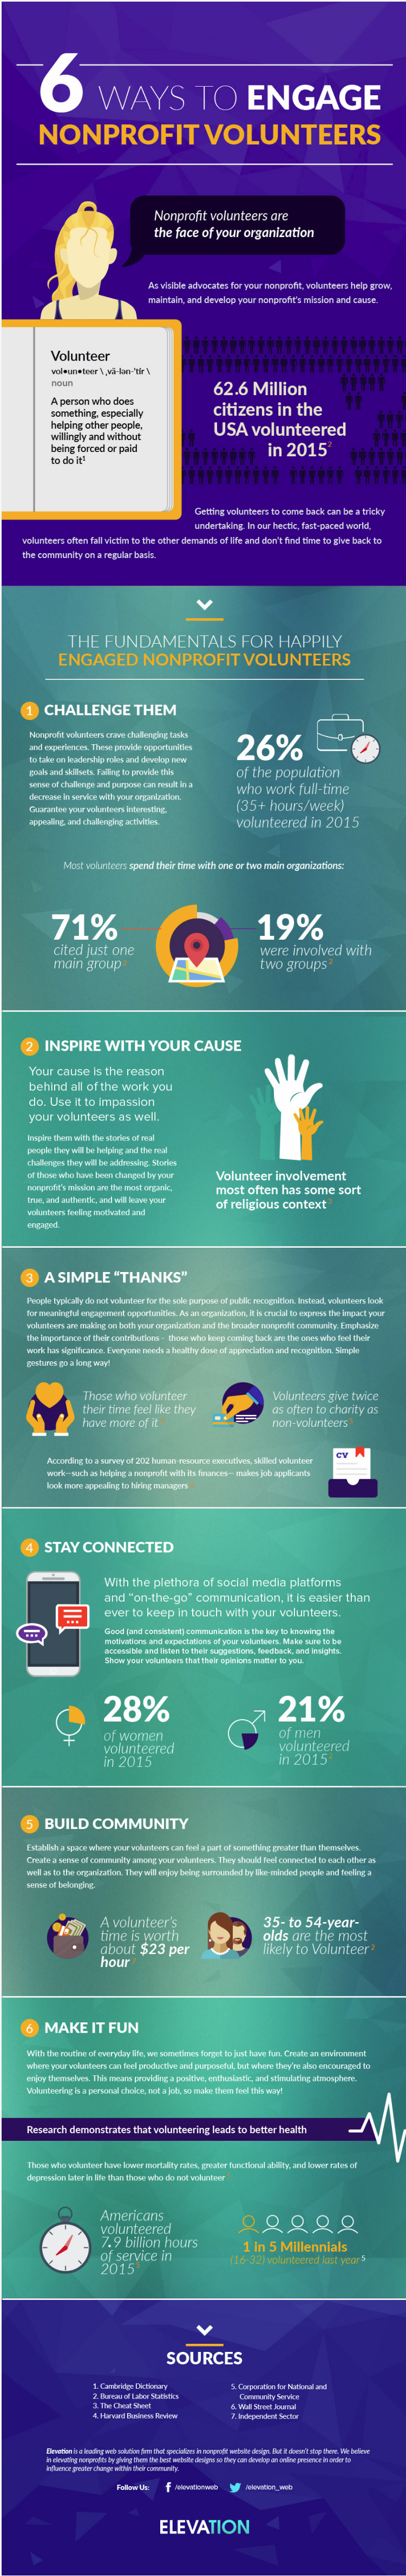 6-ways-to-engage-nonprofit-volunteers-infographic-elevation